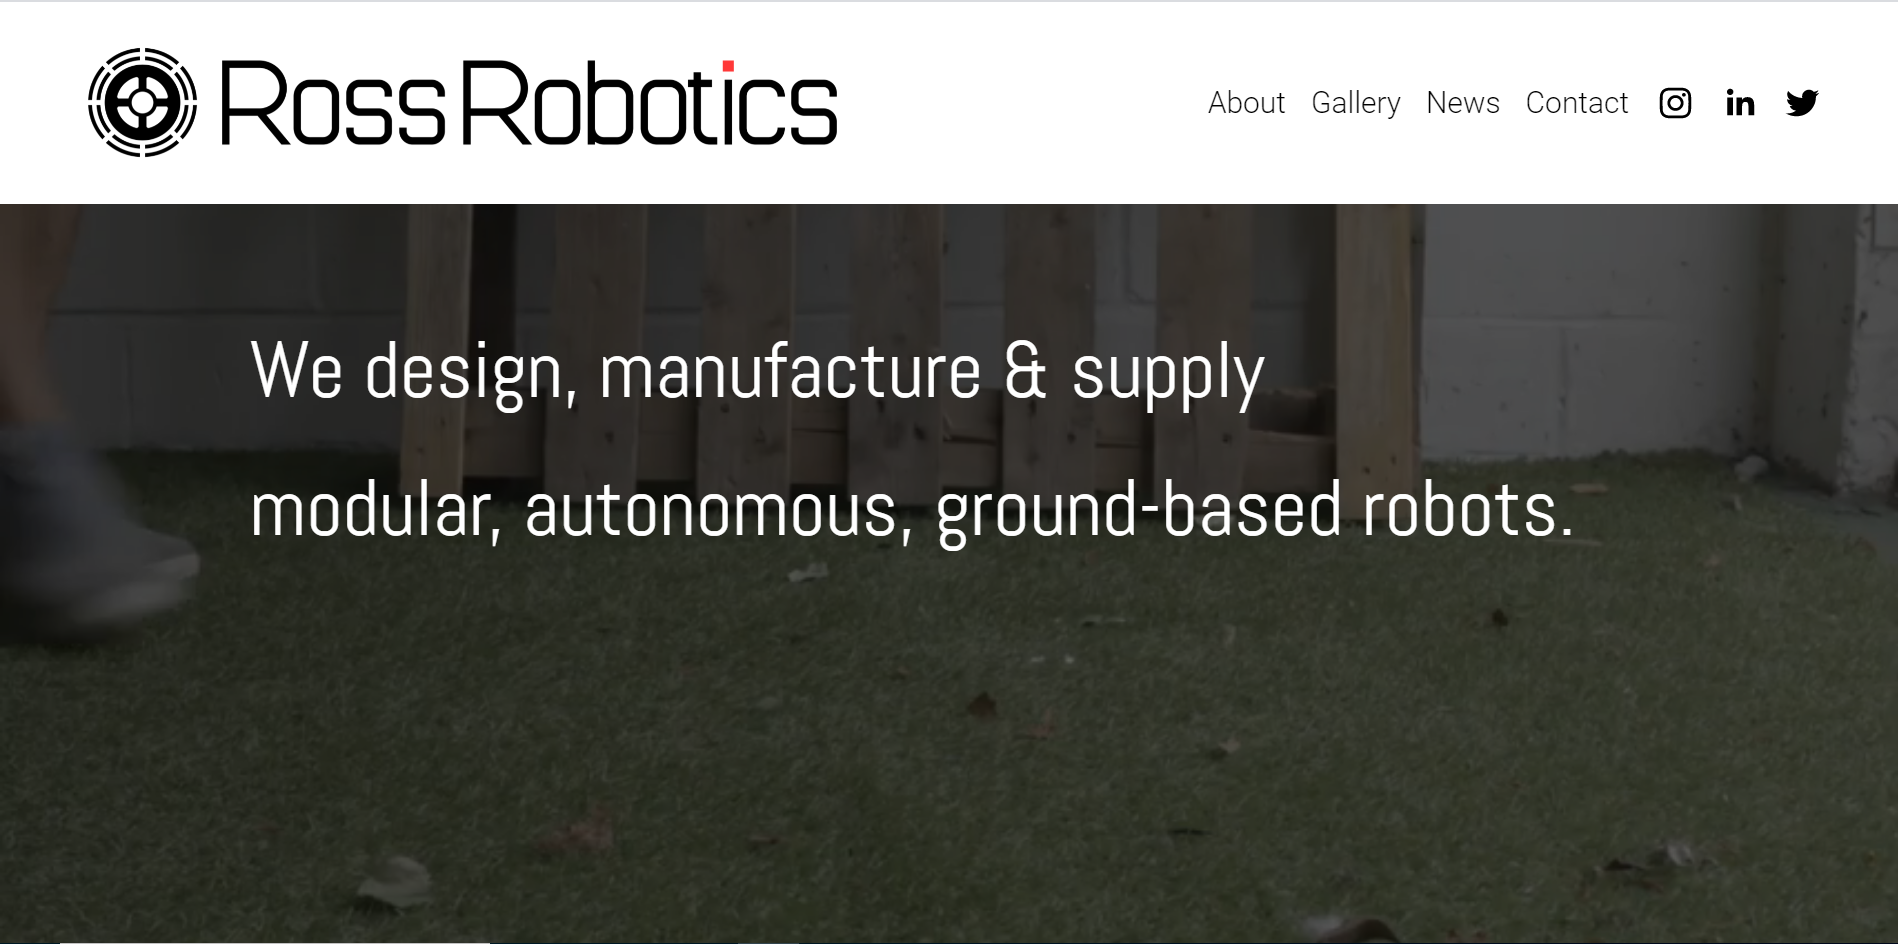 Ross Robotics